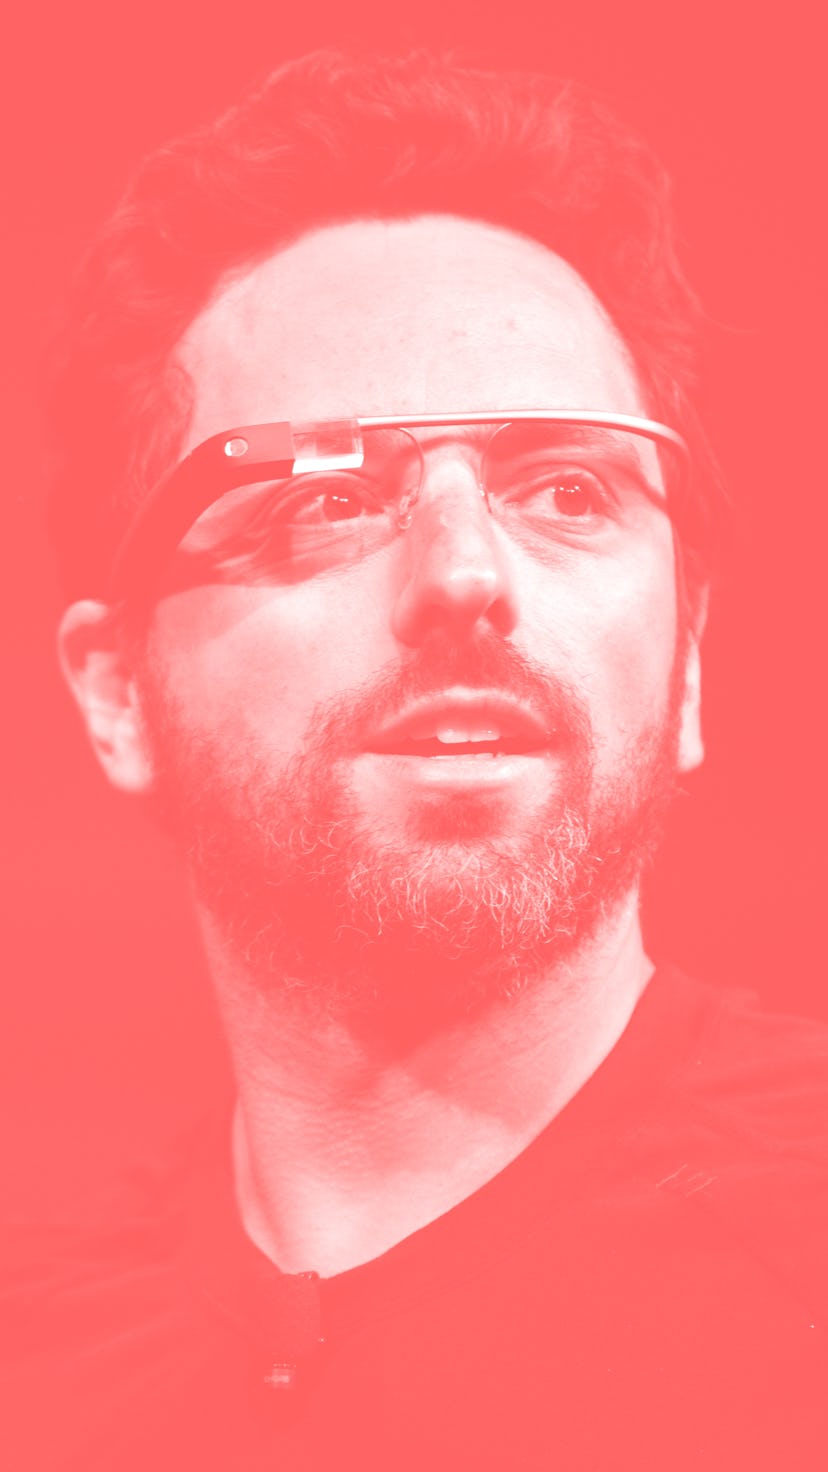 The Google Glass headset.